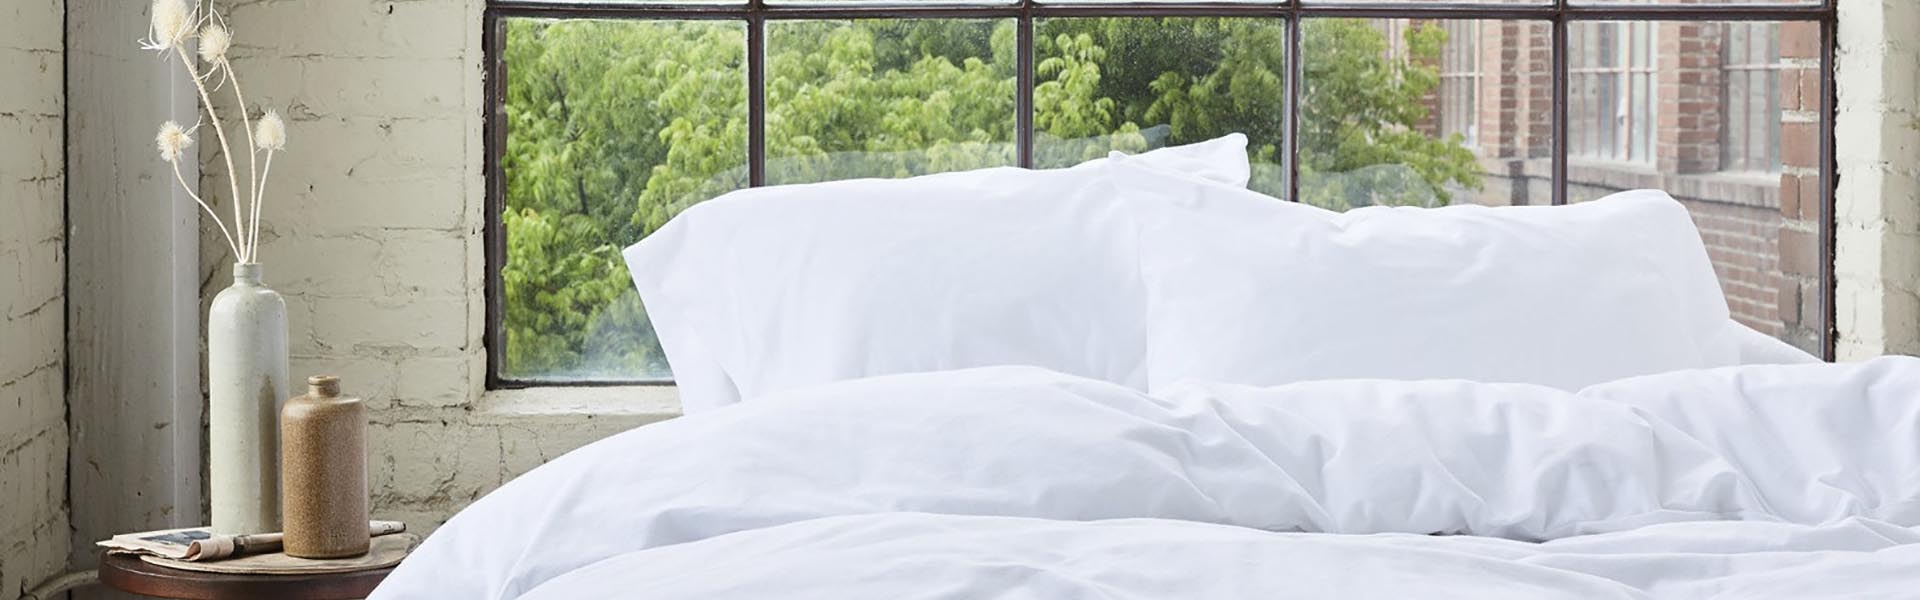 Linen Cupboard Specialists In Luxury Bedding Non Standard Sizes